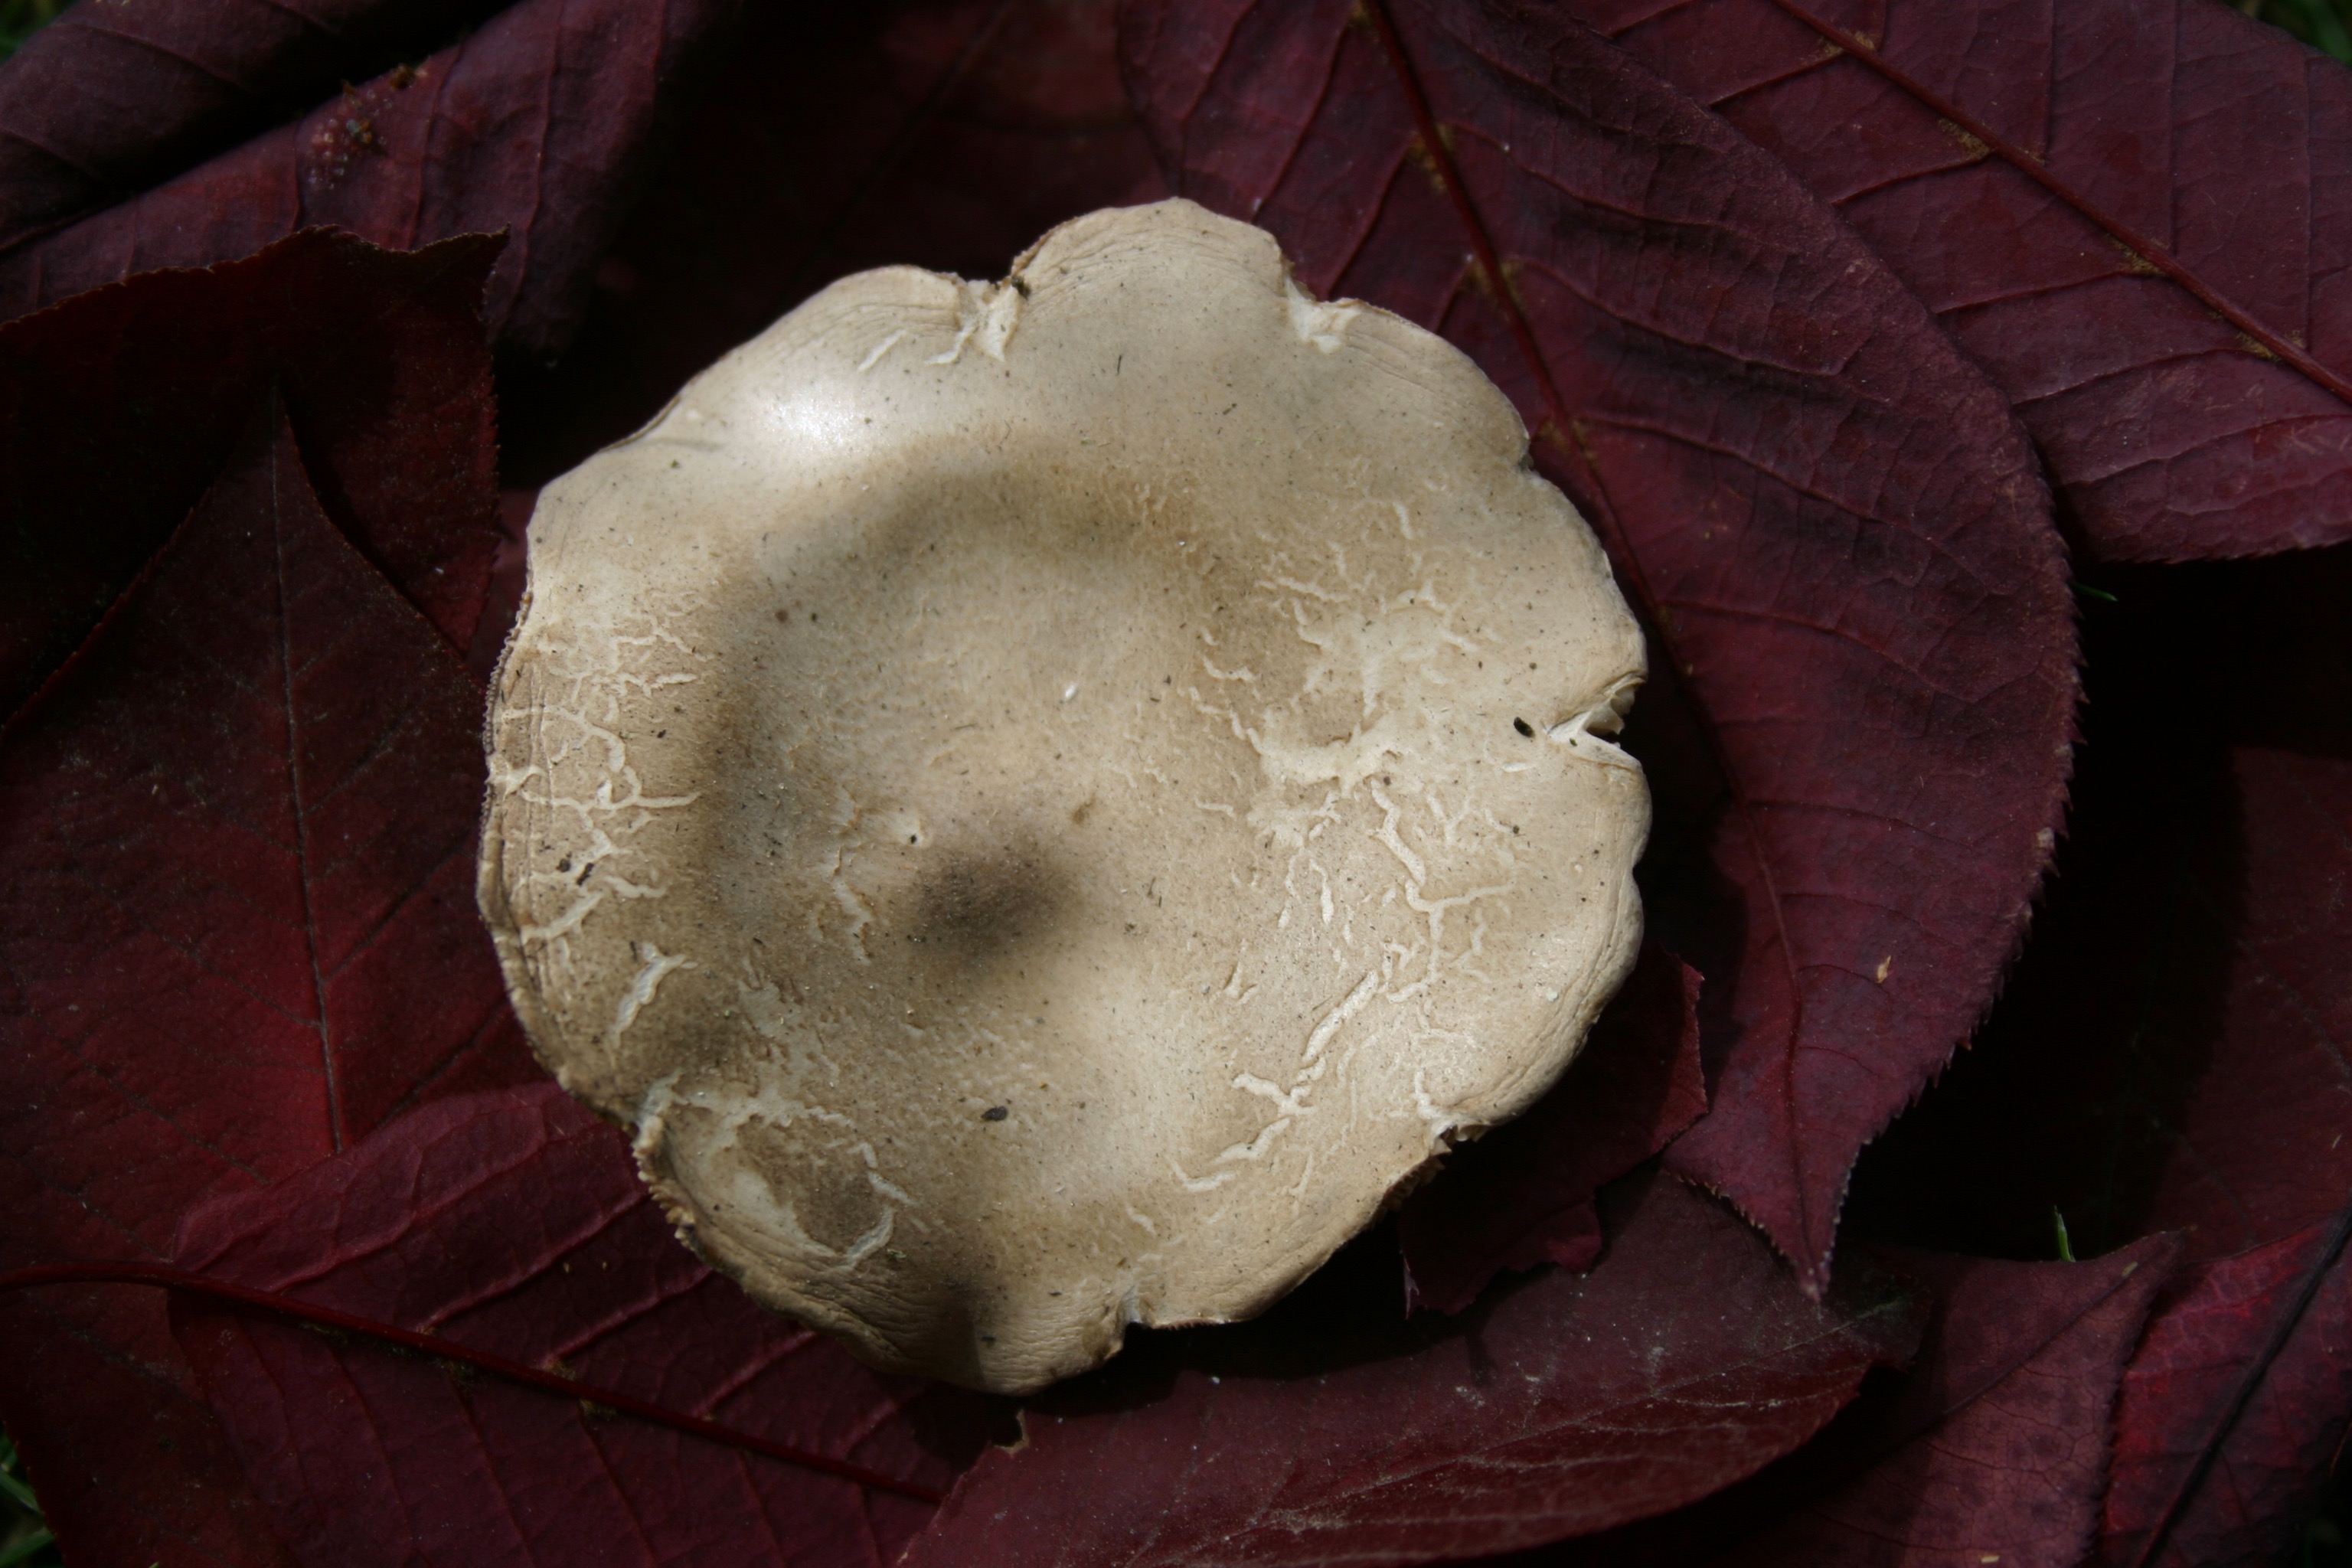 White mushroom on red leaves. 